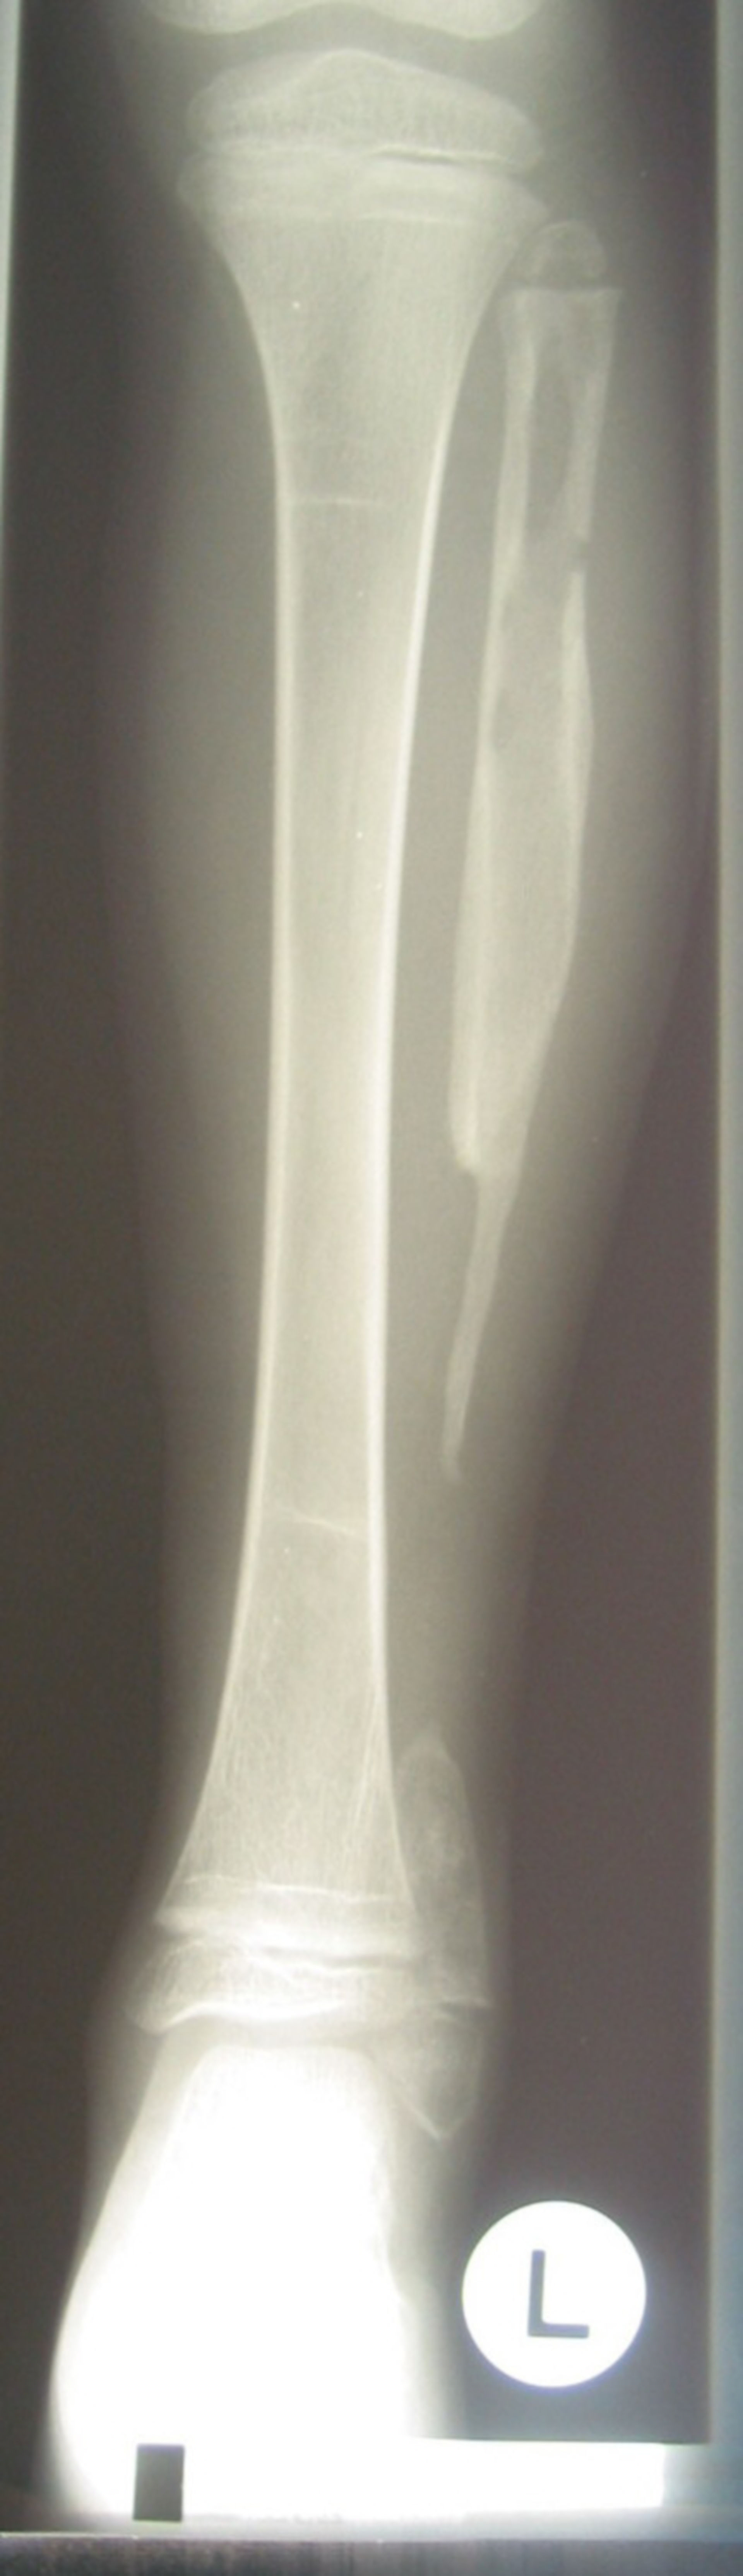 Chronic osteomyelitis of lower leg